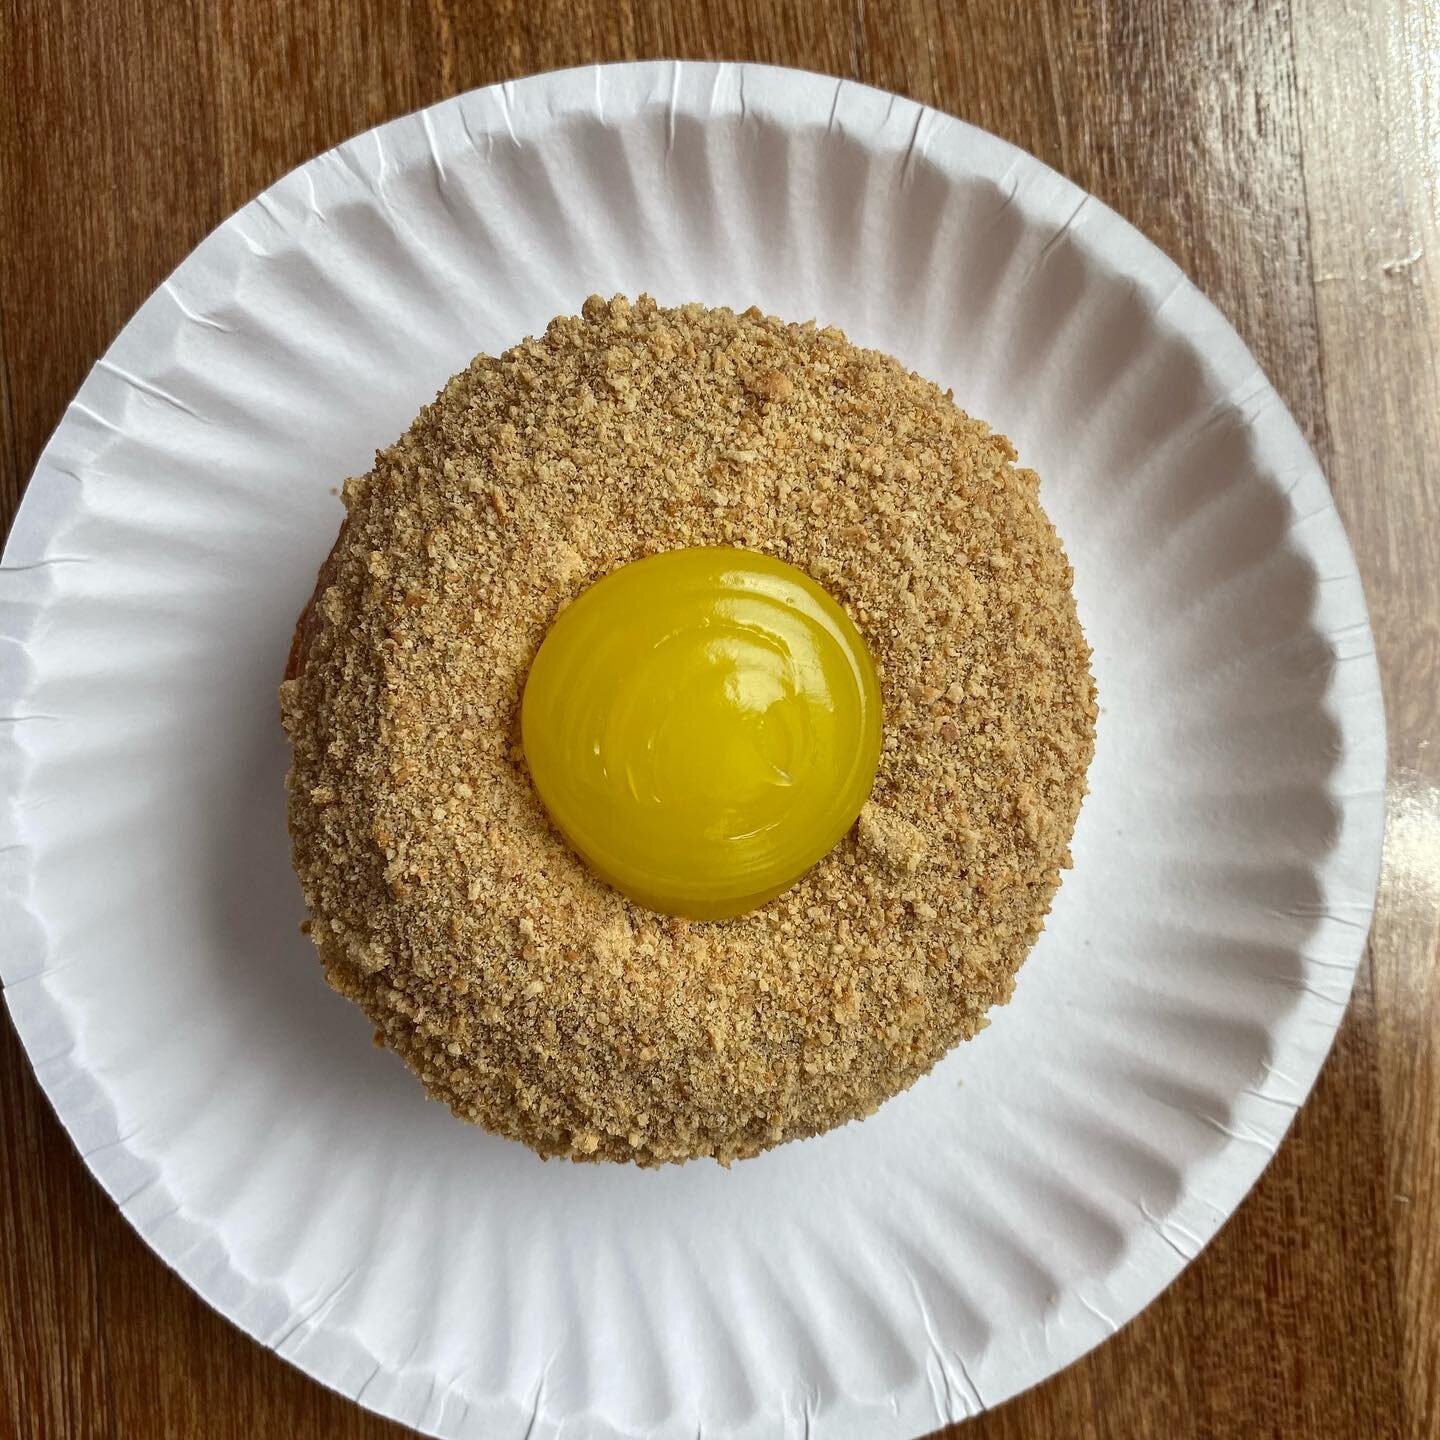 New Donut Special - The Sandbar
Glazed donut, graham cracker crumbs, lemon topping
#getnauti #nautidonuts #ocnj 
.
.
.
#oceancitynj #eatinocnj #ocnjdaily #southjerseyeats #summerattheshore #jerseyshore #sjfoodie #donuts #donutsofinstagram #instafood 